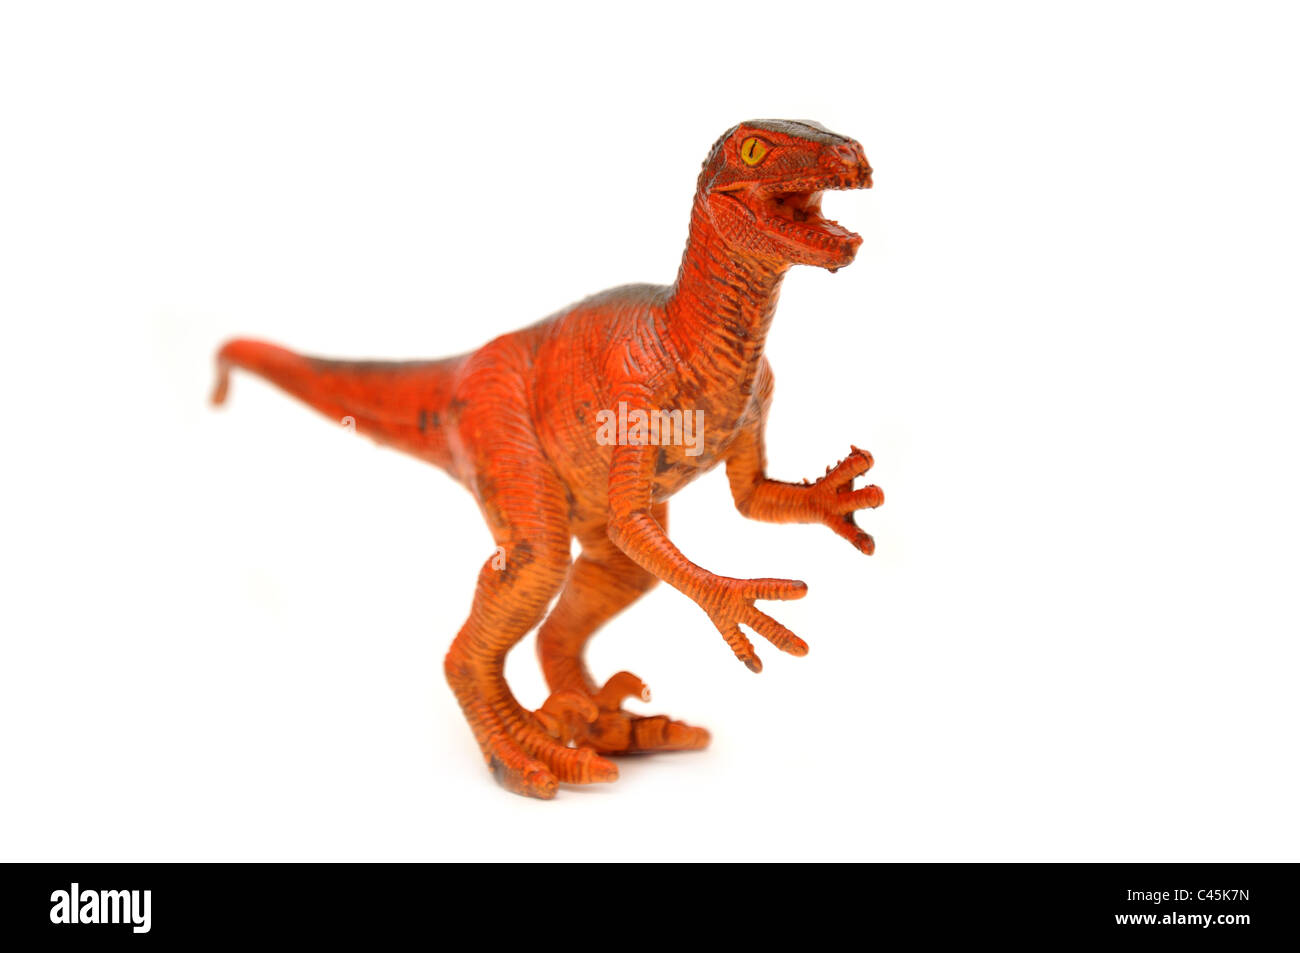 Juguetes de dinosaurios fotografías e imágenes de alta resolución